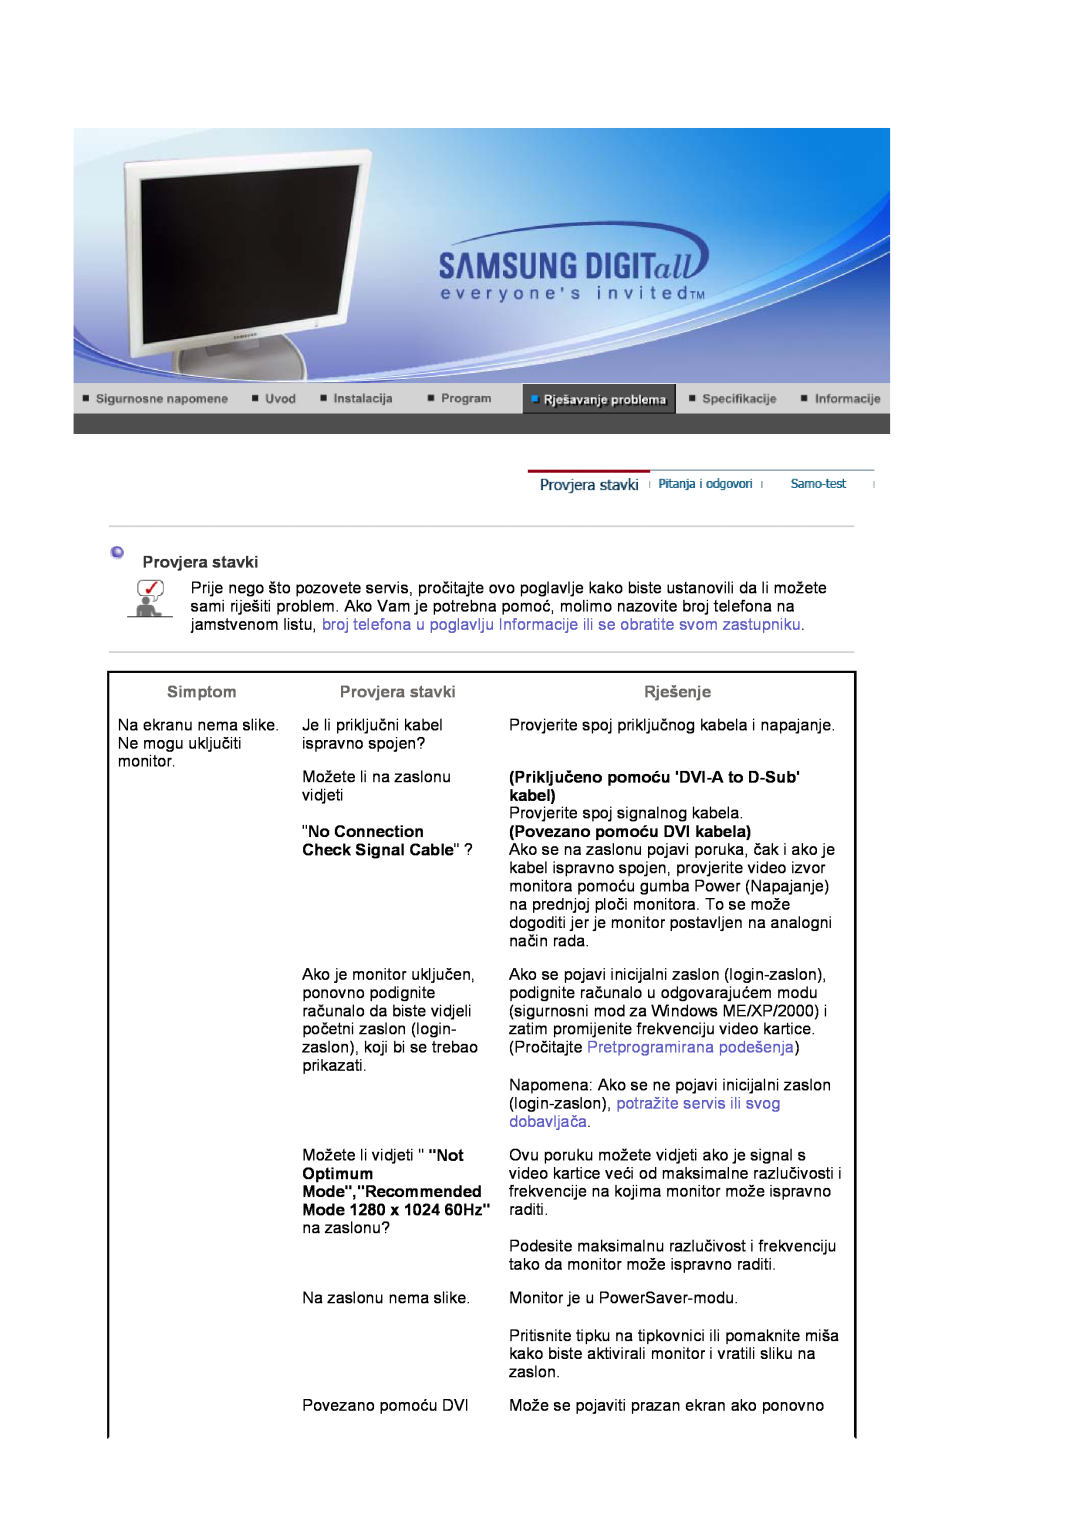 Samsung LS19HJDQHV/EDC Provjera stavki, Priključeno pomoću DVI-A to D-Sub, kabel, No Connection, Check Signal Cable ? 